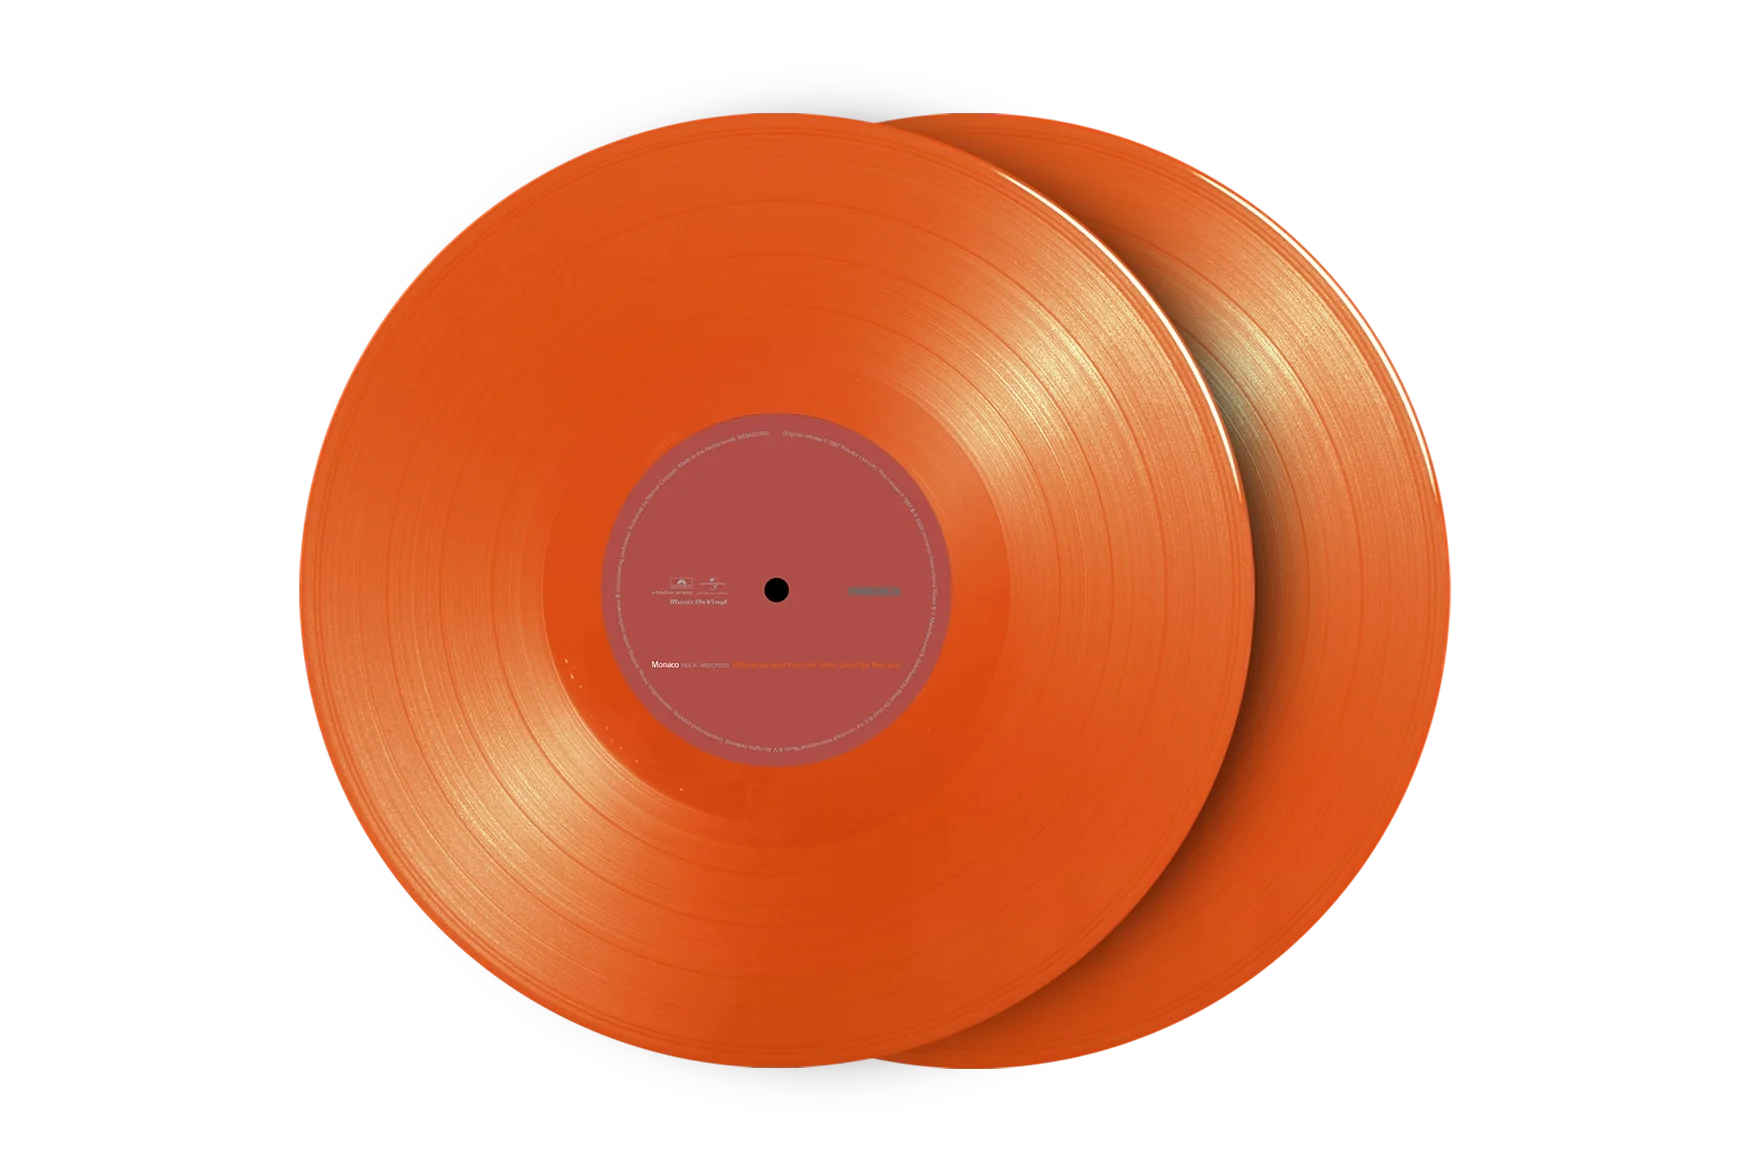 MONACO - Music For Pleasure (Expanded Edition) - 2LP - 180g Orange Vinyl [JUN 14]